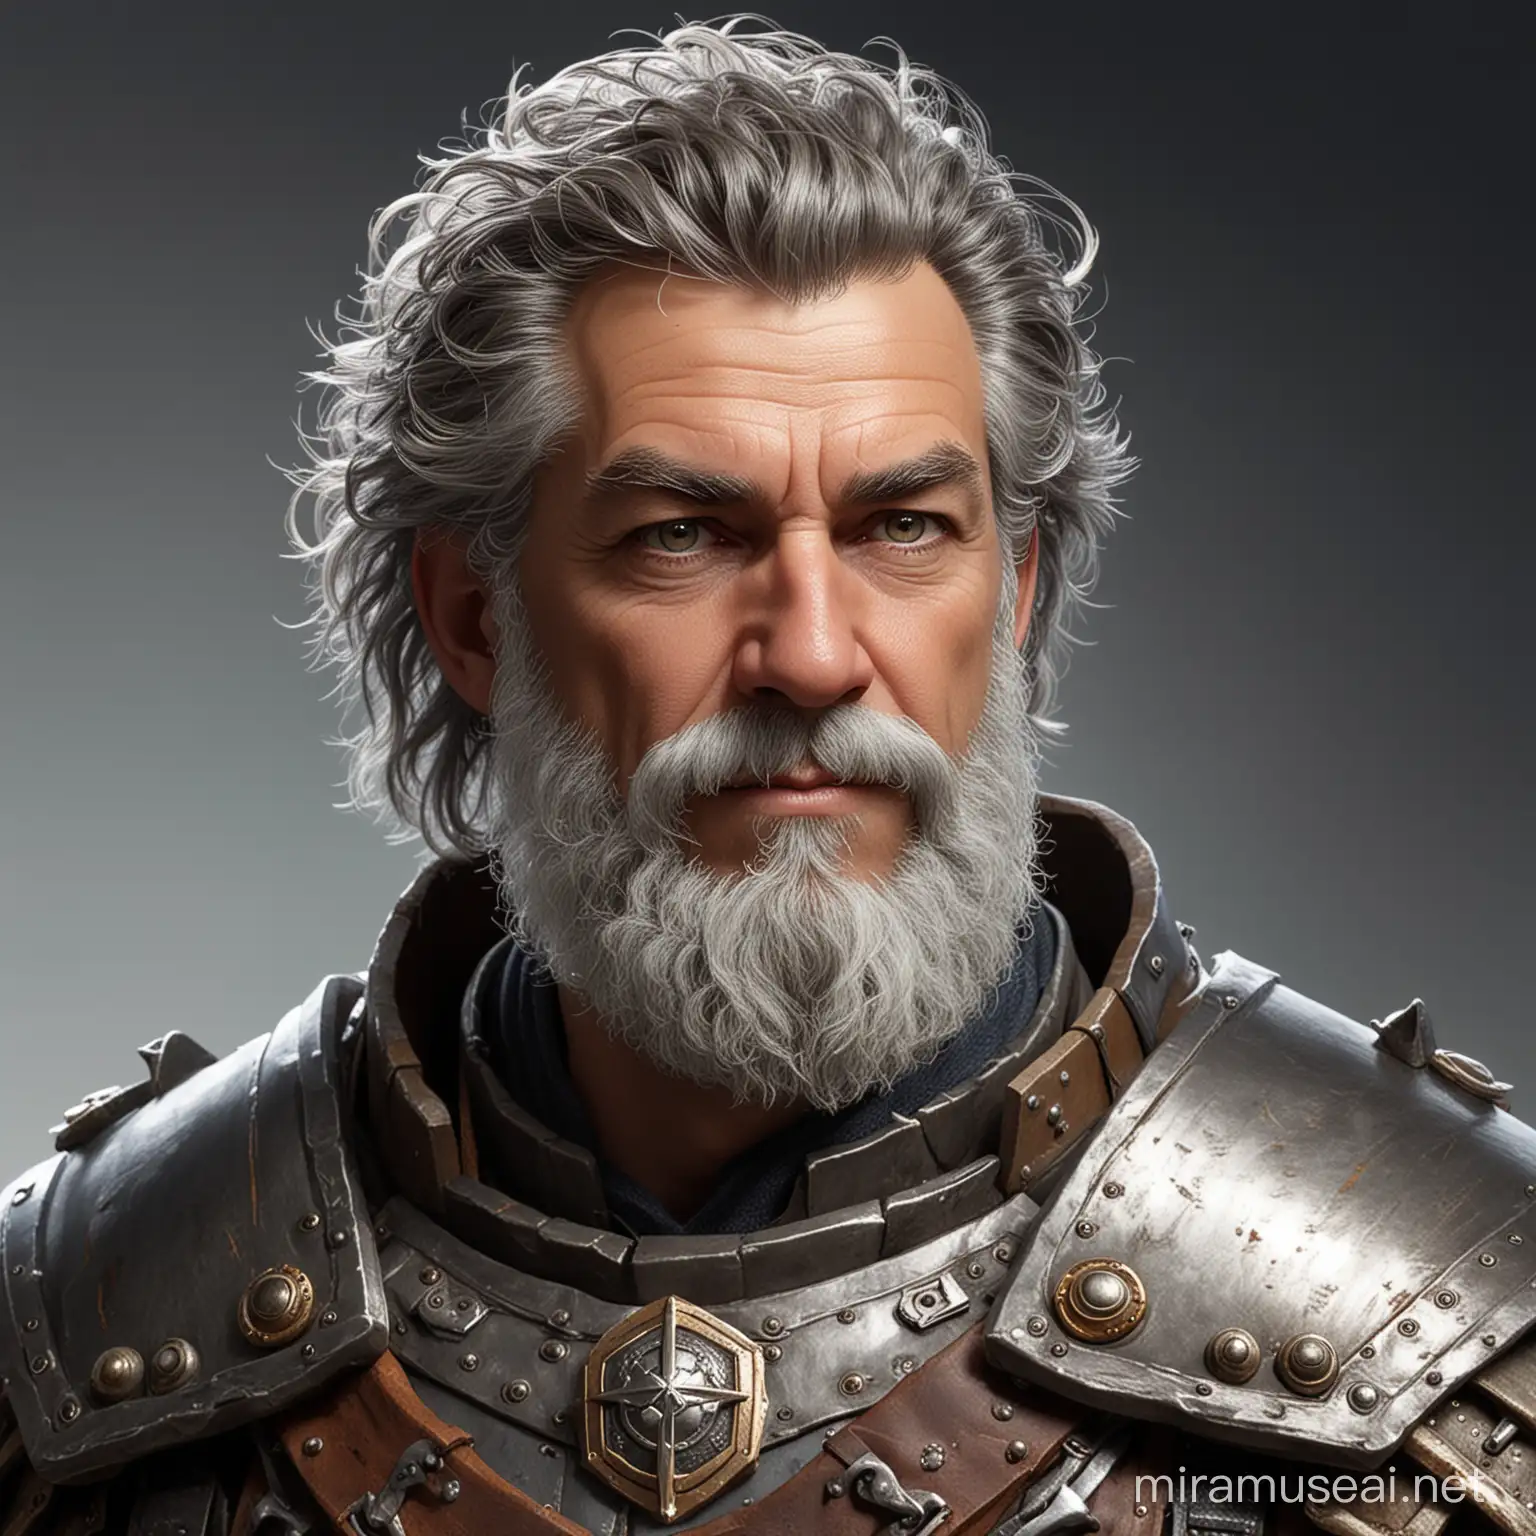 DND Artificer in his 60s. Short, gray, wild hair and bushy beard. Wearing heavy armor.